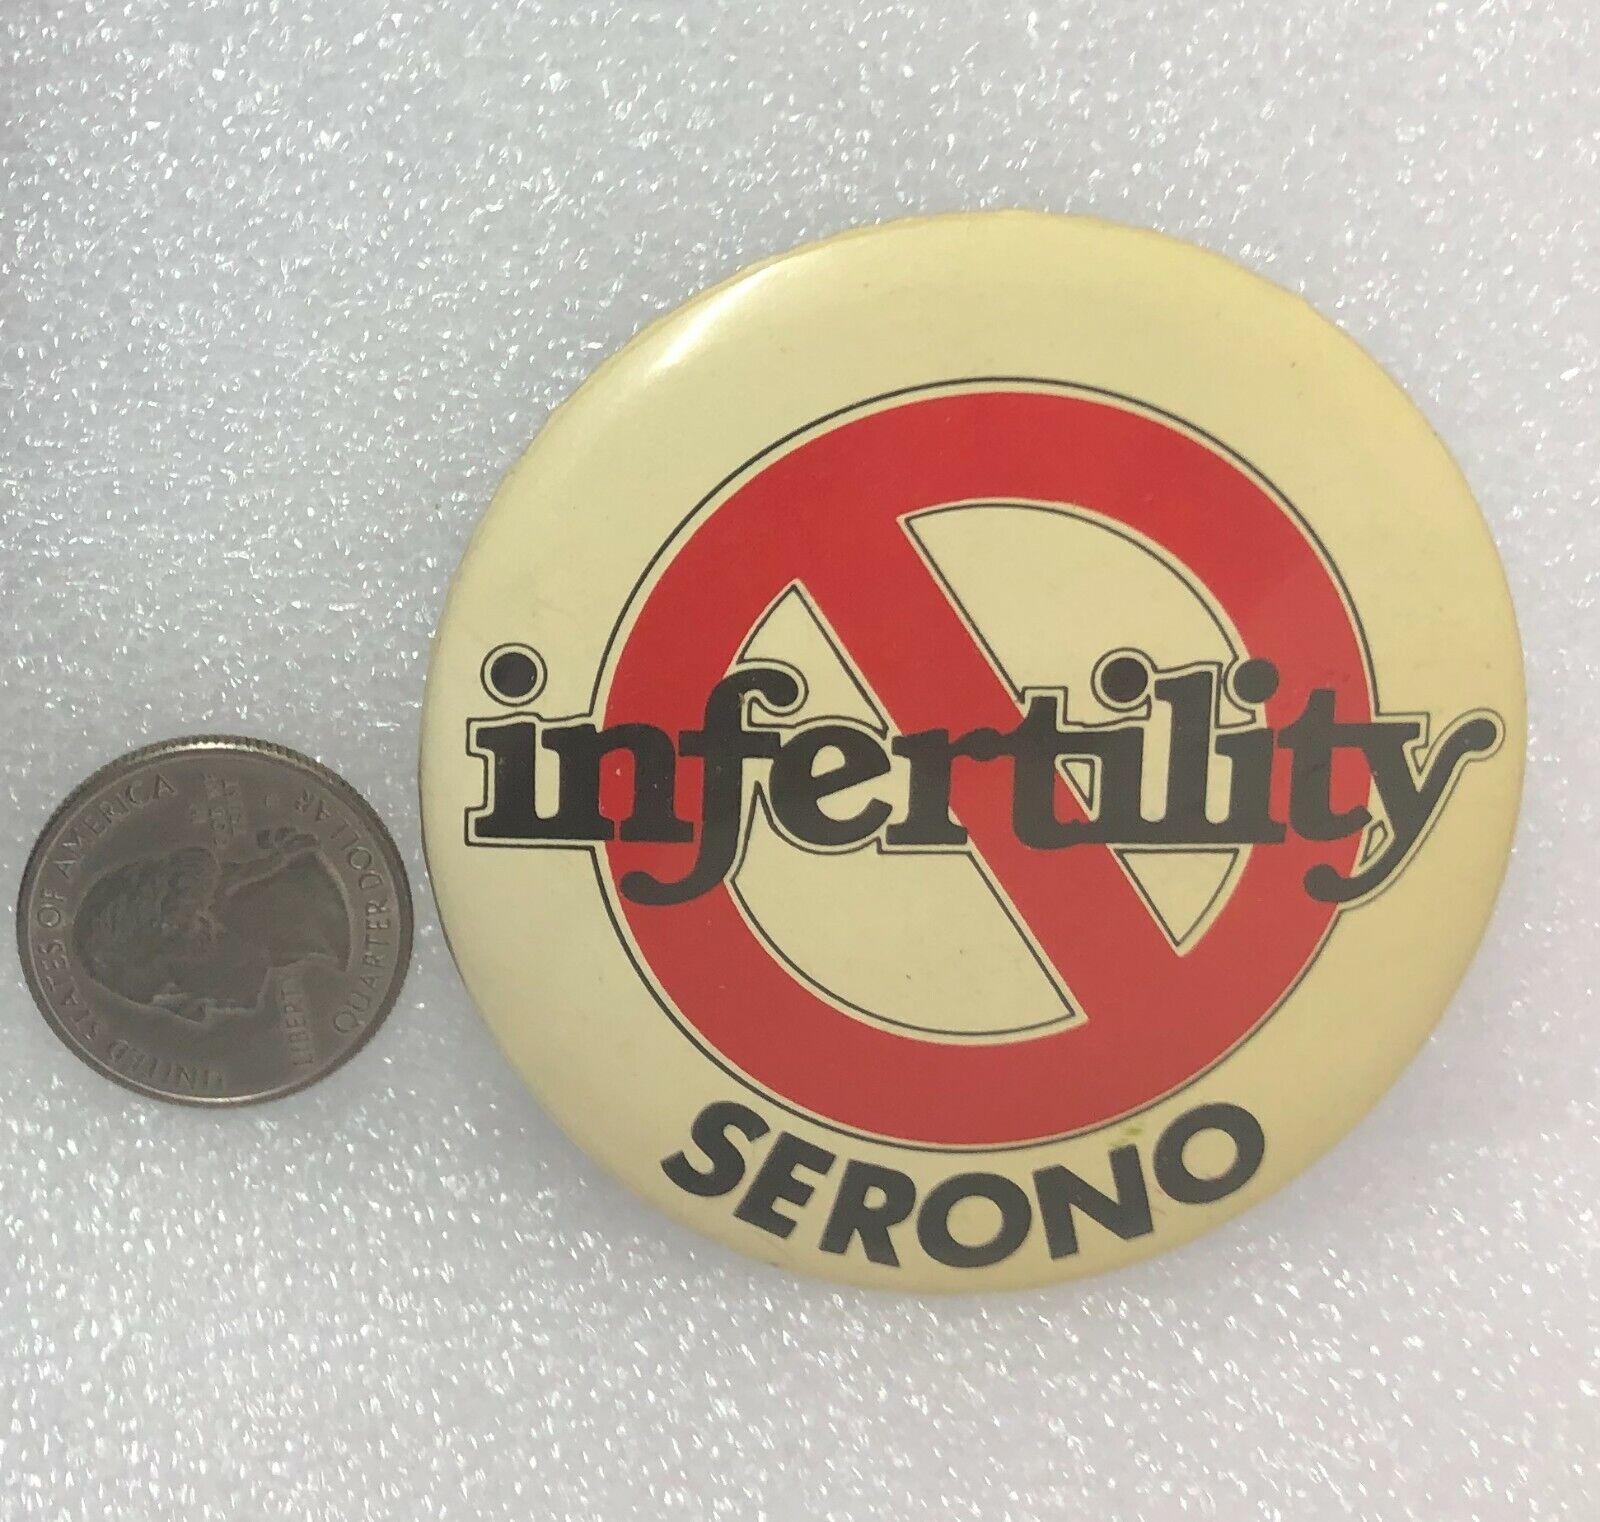 Serono - No Infertility Advertising Pin 